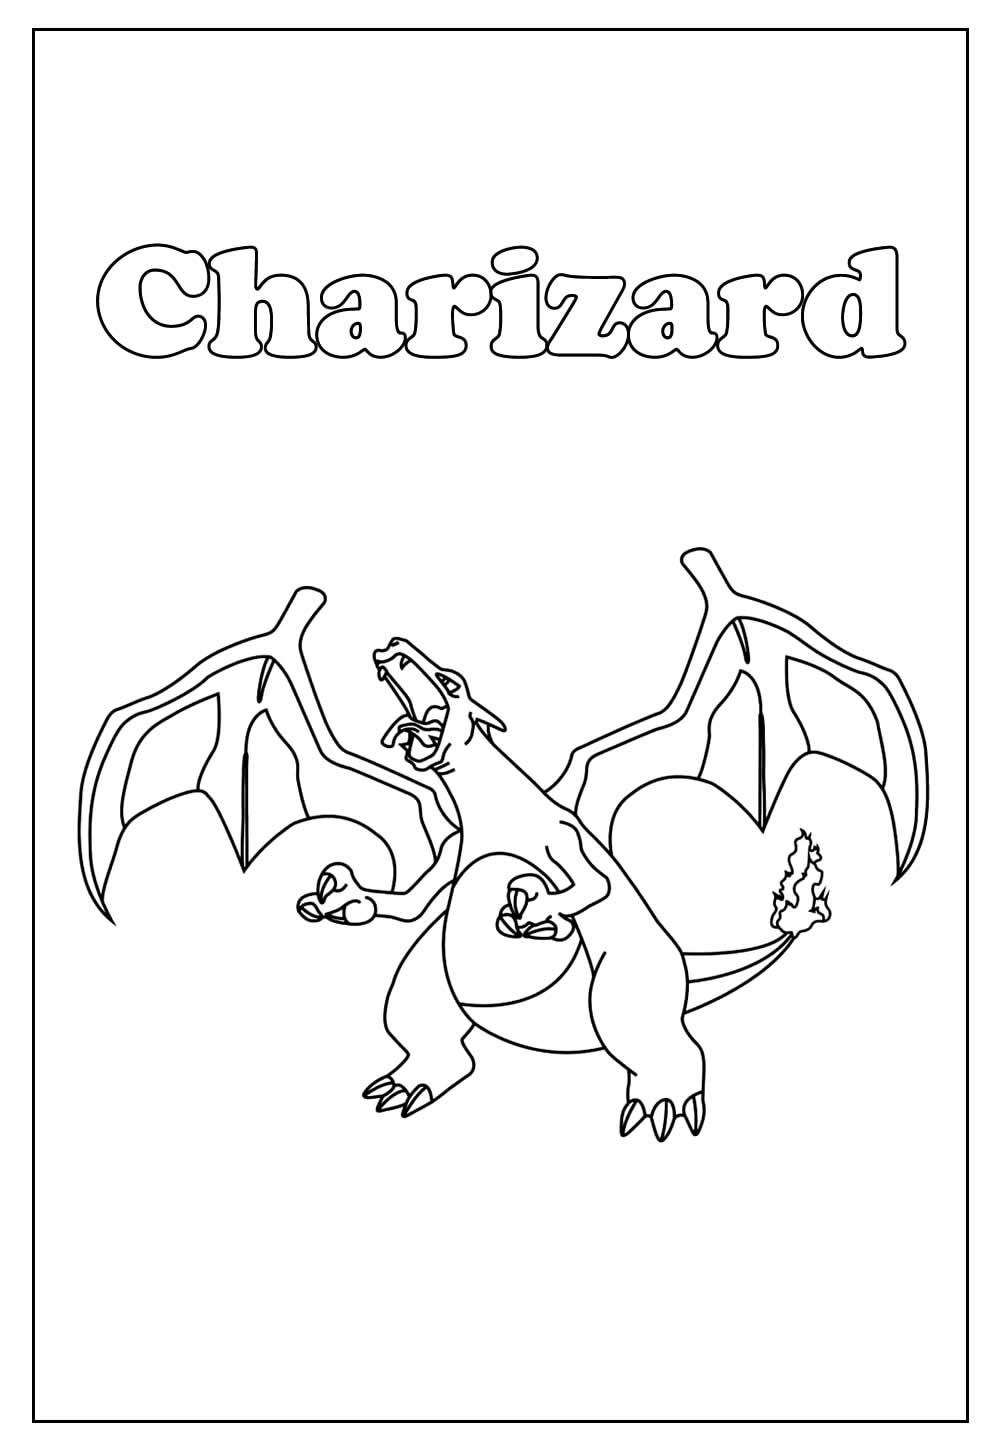 Desenho de Charizard